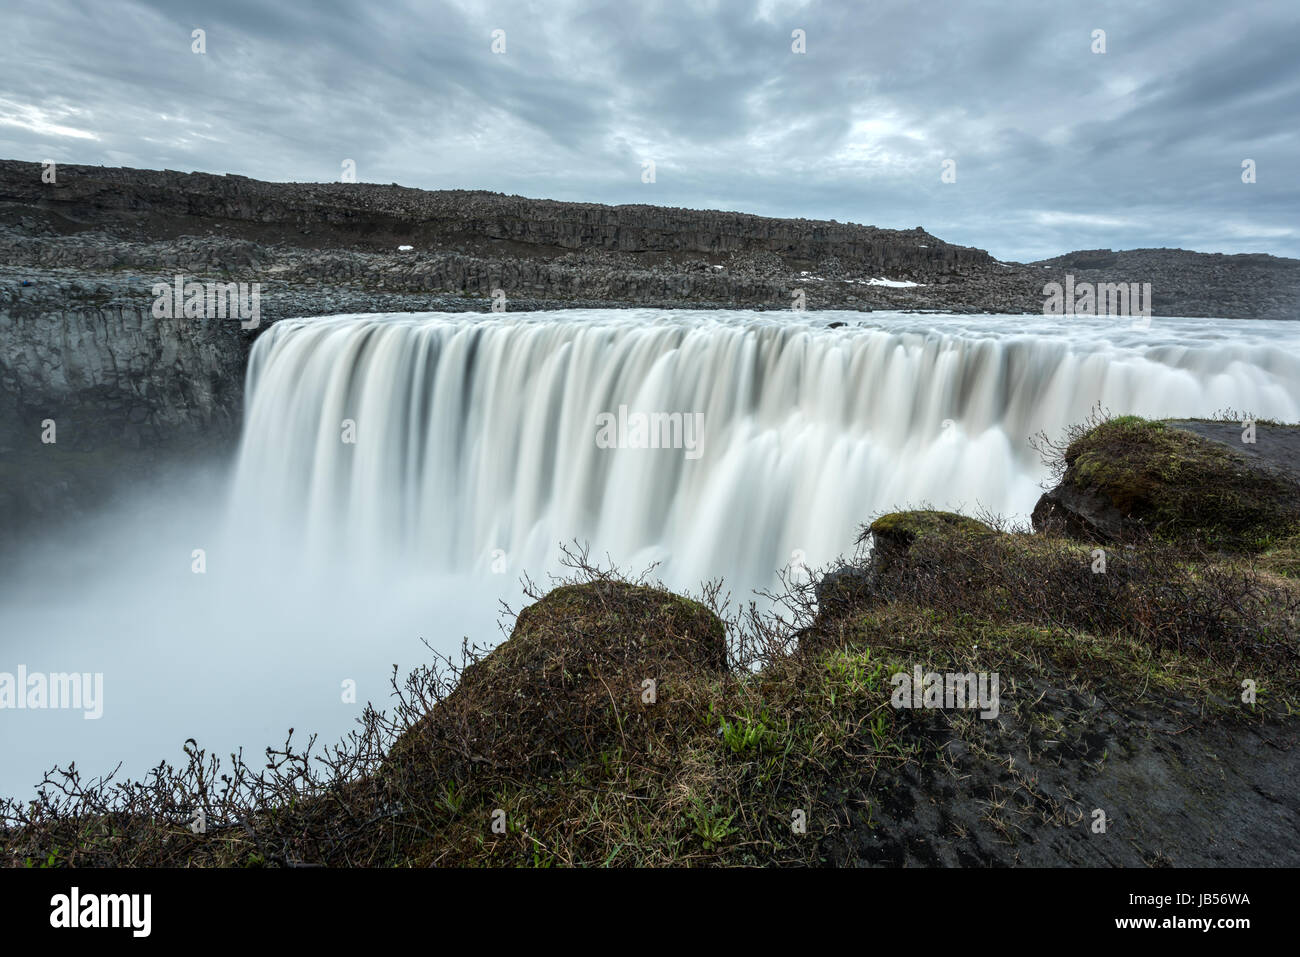 Dettifoss - most powerful waterfall in Europe. Jokulsargljufur National Park, Iceland. Stock Photo